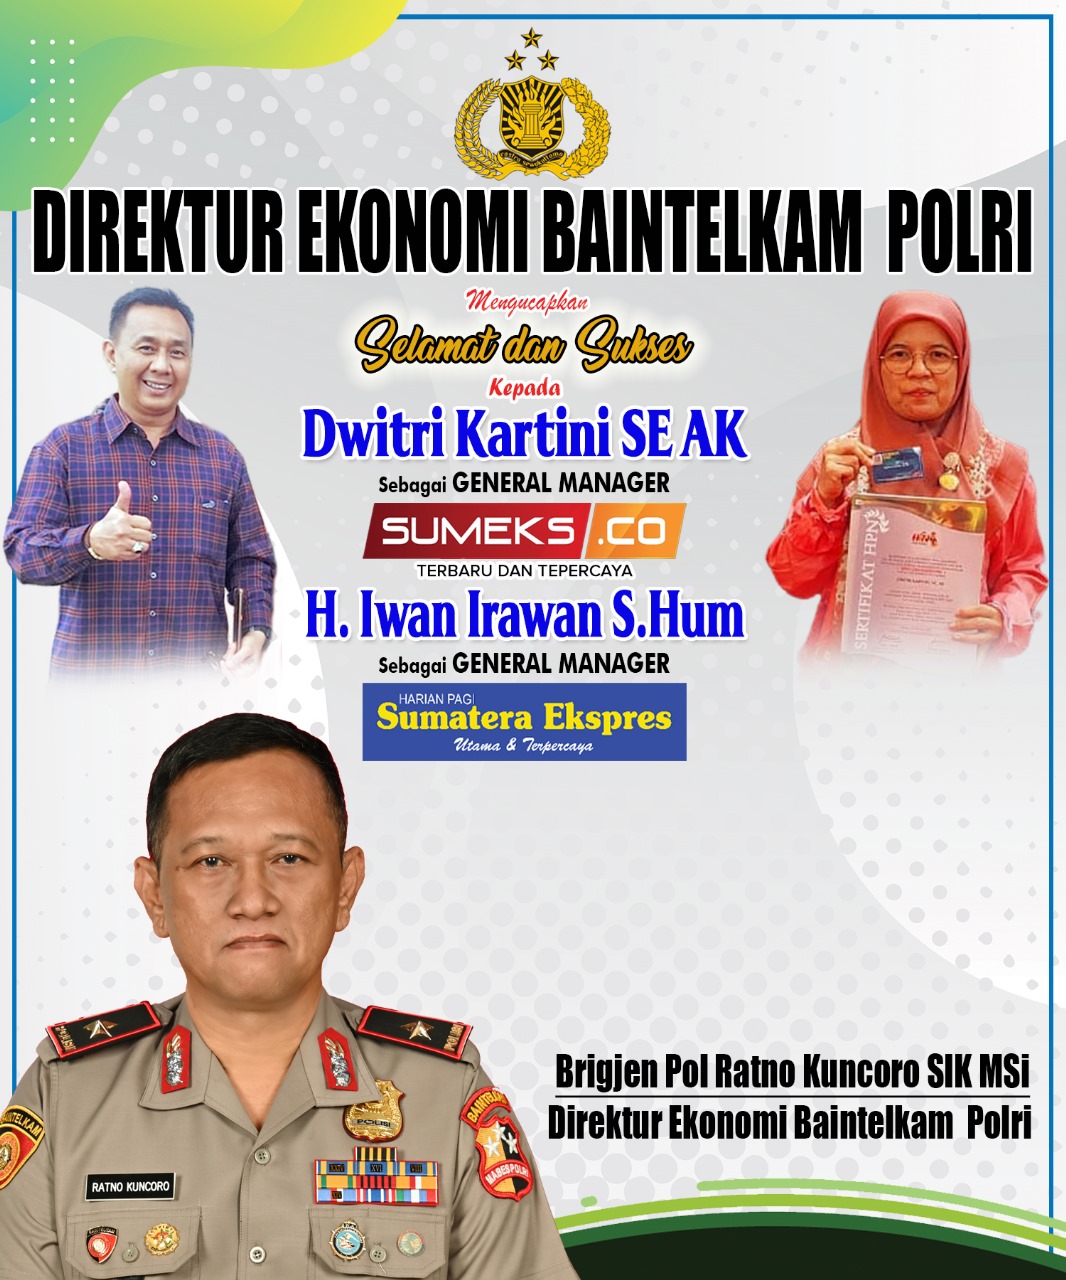 Direktur Ekonomi Baintelkam Polri Mengucapkan Selamat dan Sukses Kepada Iwan Irawan dan Dwitri Kartini